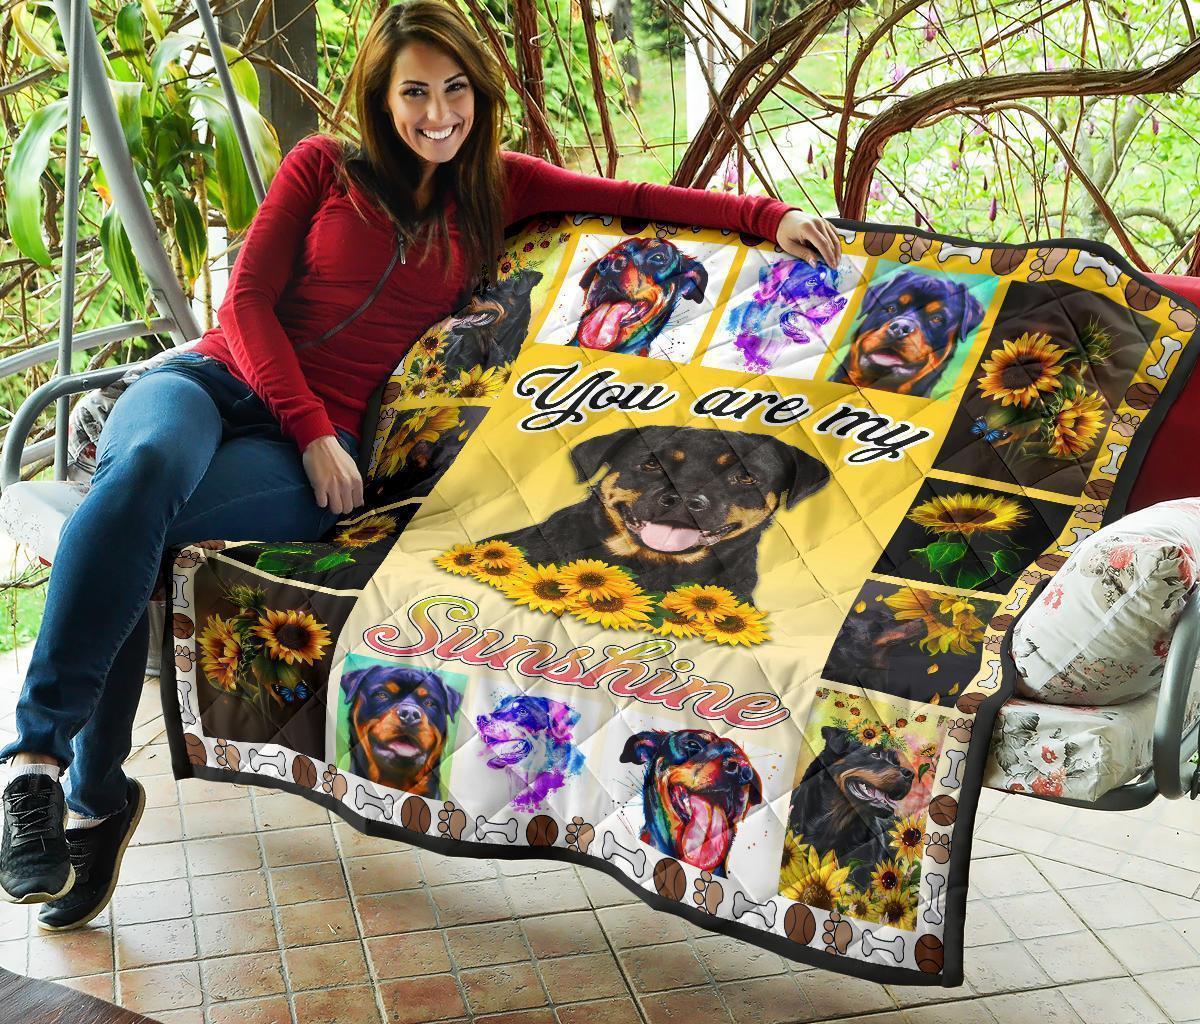 You Are My Sunshine Sunflower Rottweiler Blanket Dog Lover-Gear Wanta